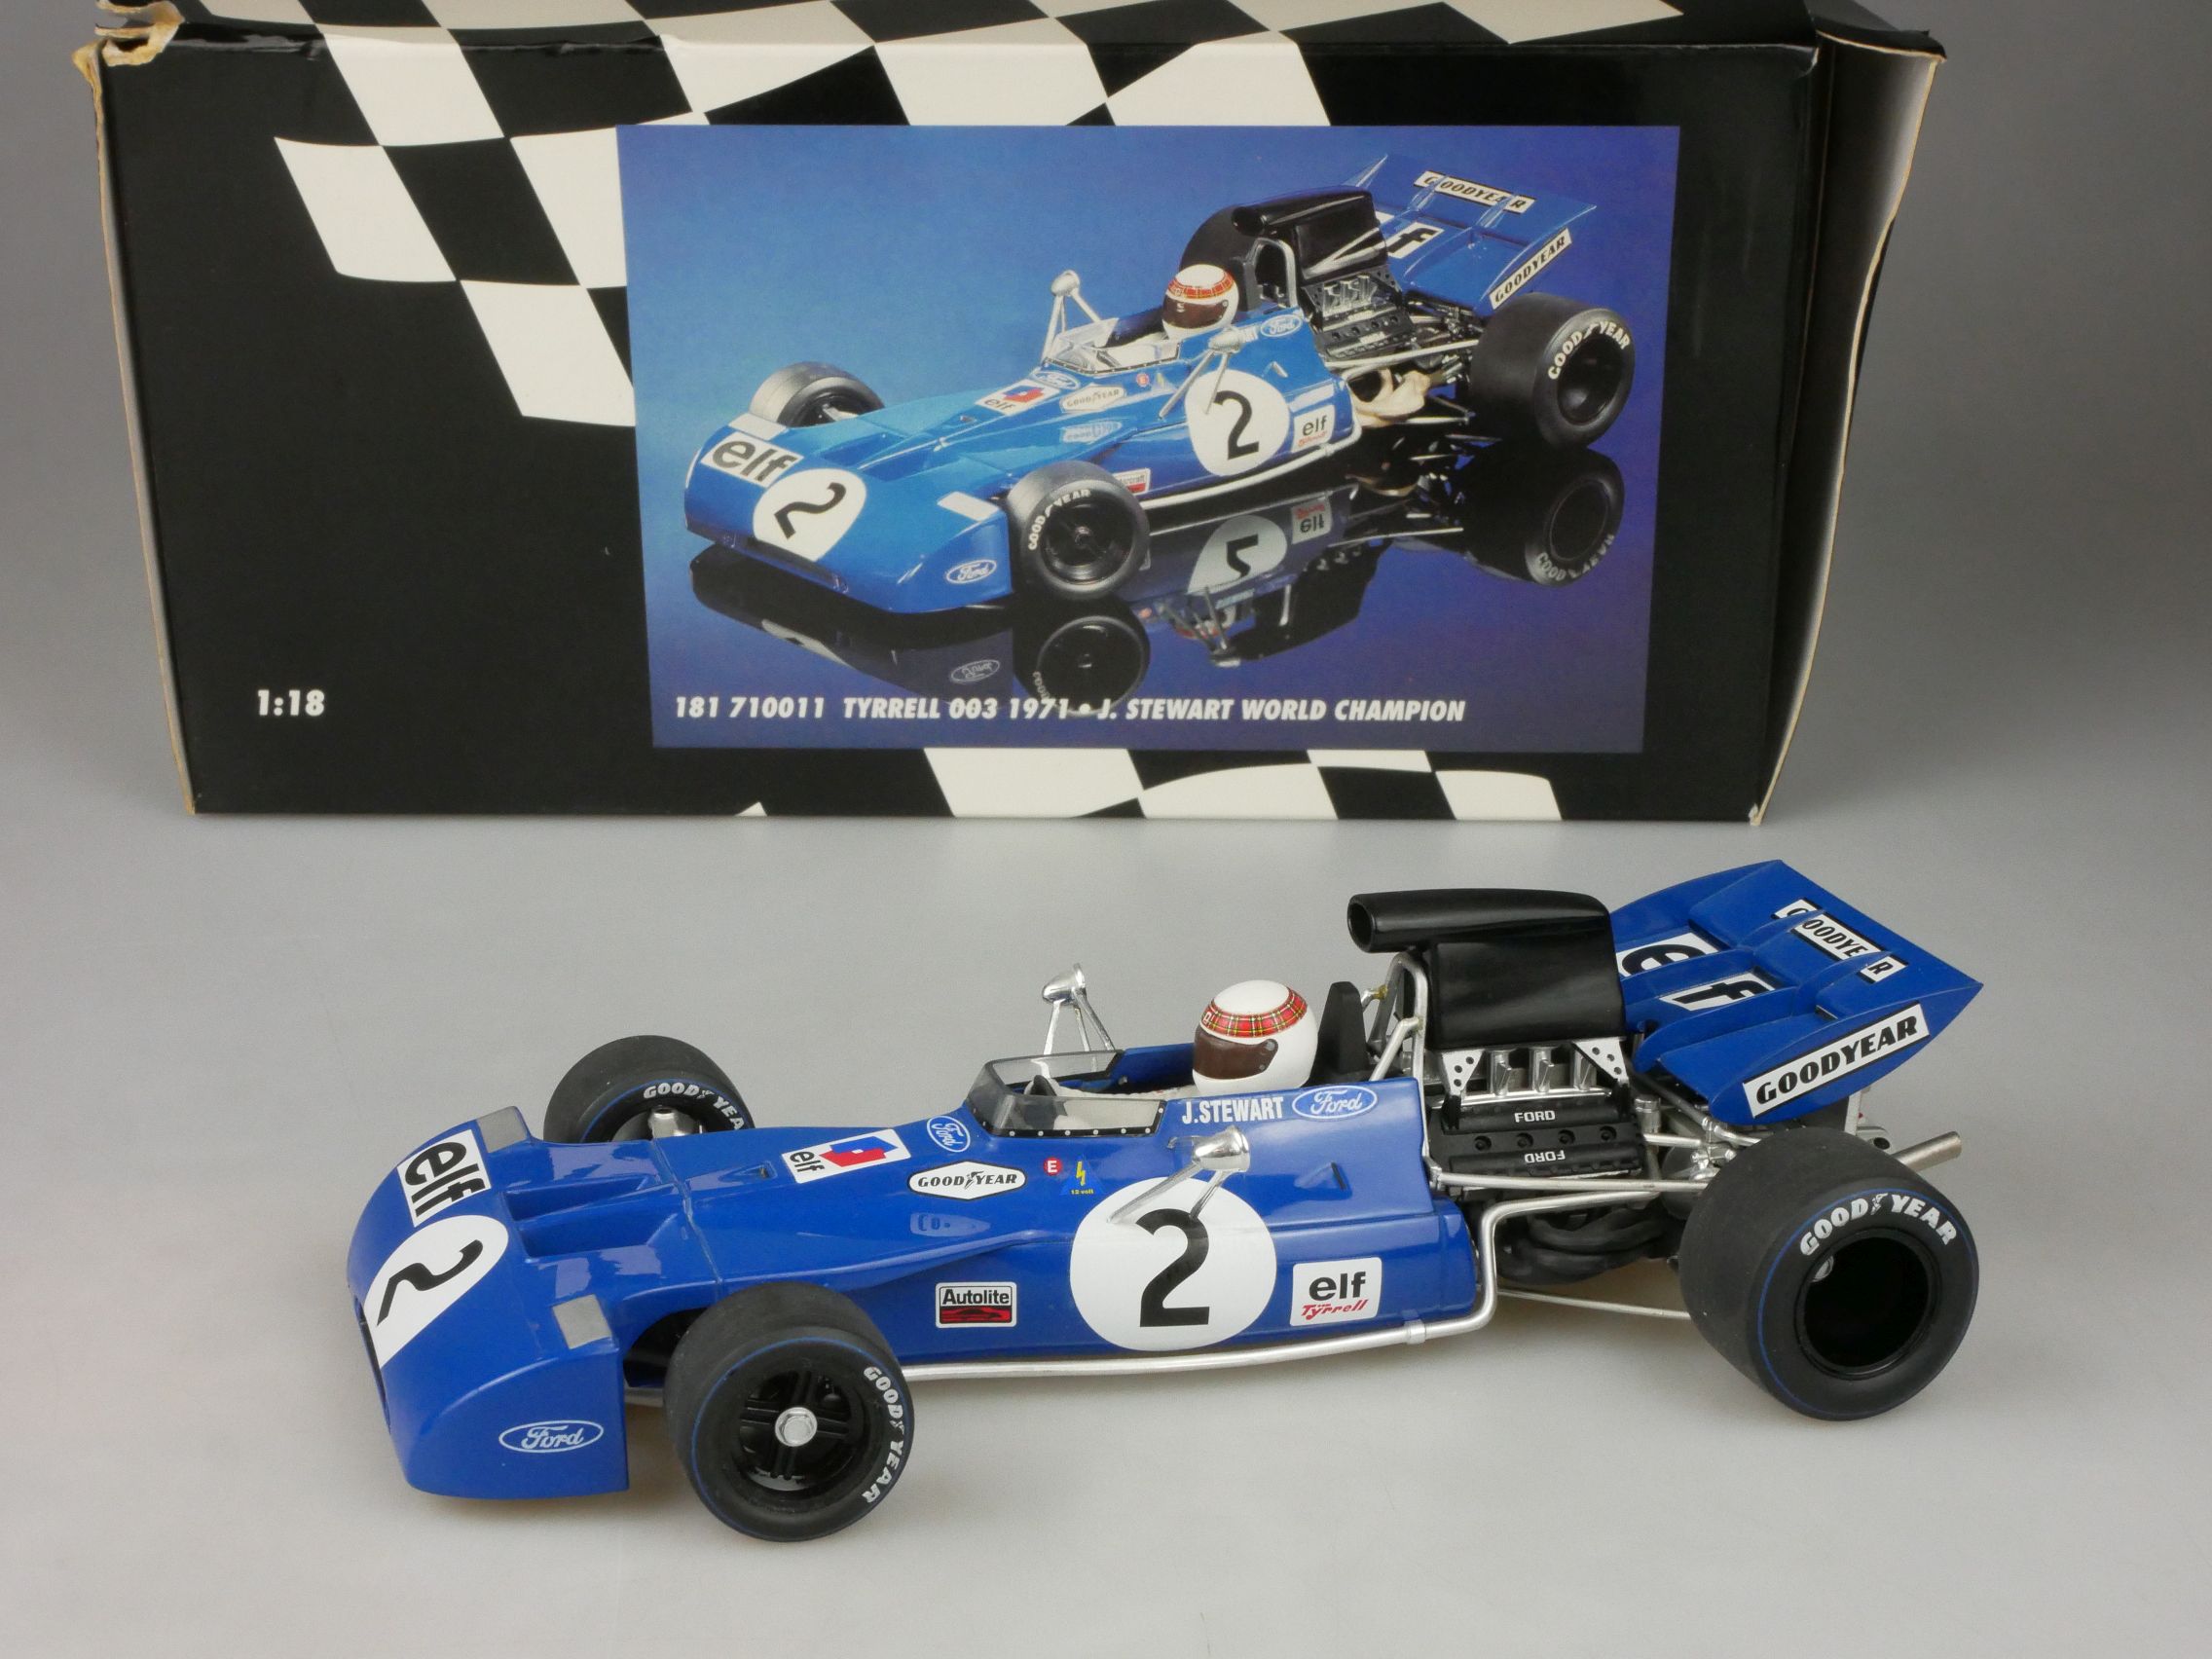 Minichamps F1 1/18 Tyrrell 003 1971 J Stewart World Champ 181710011 Box 126623